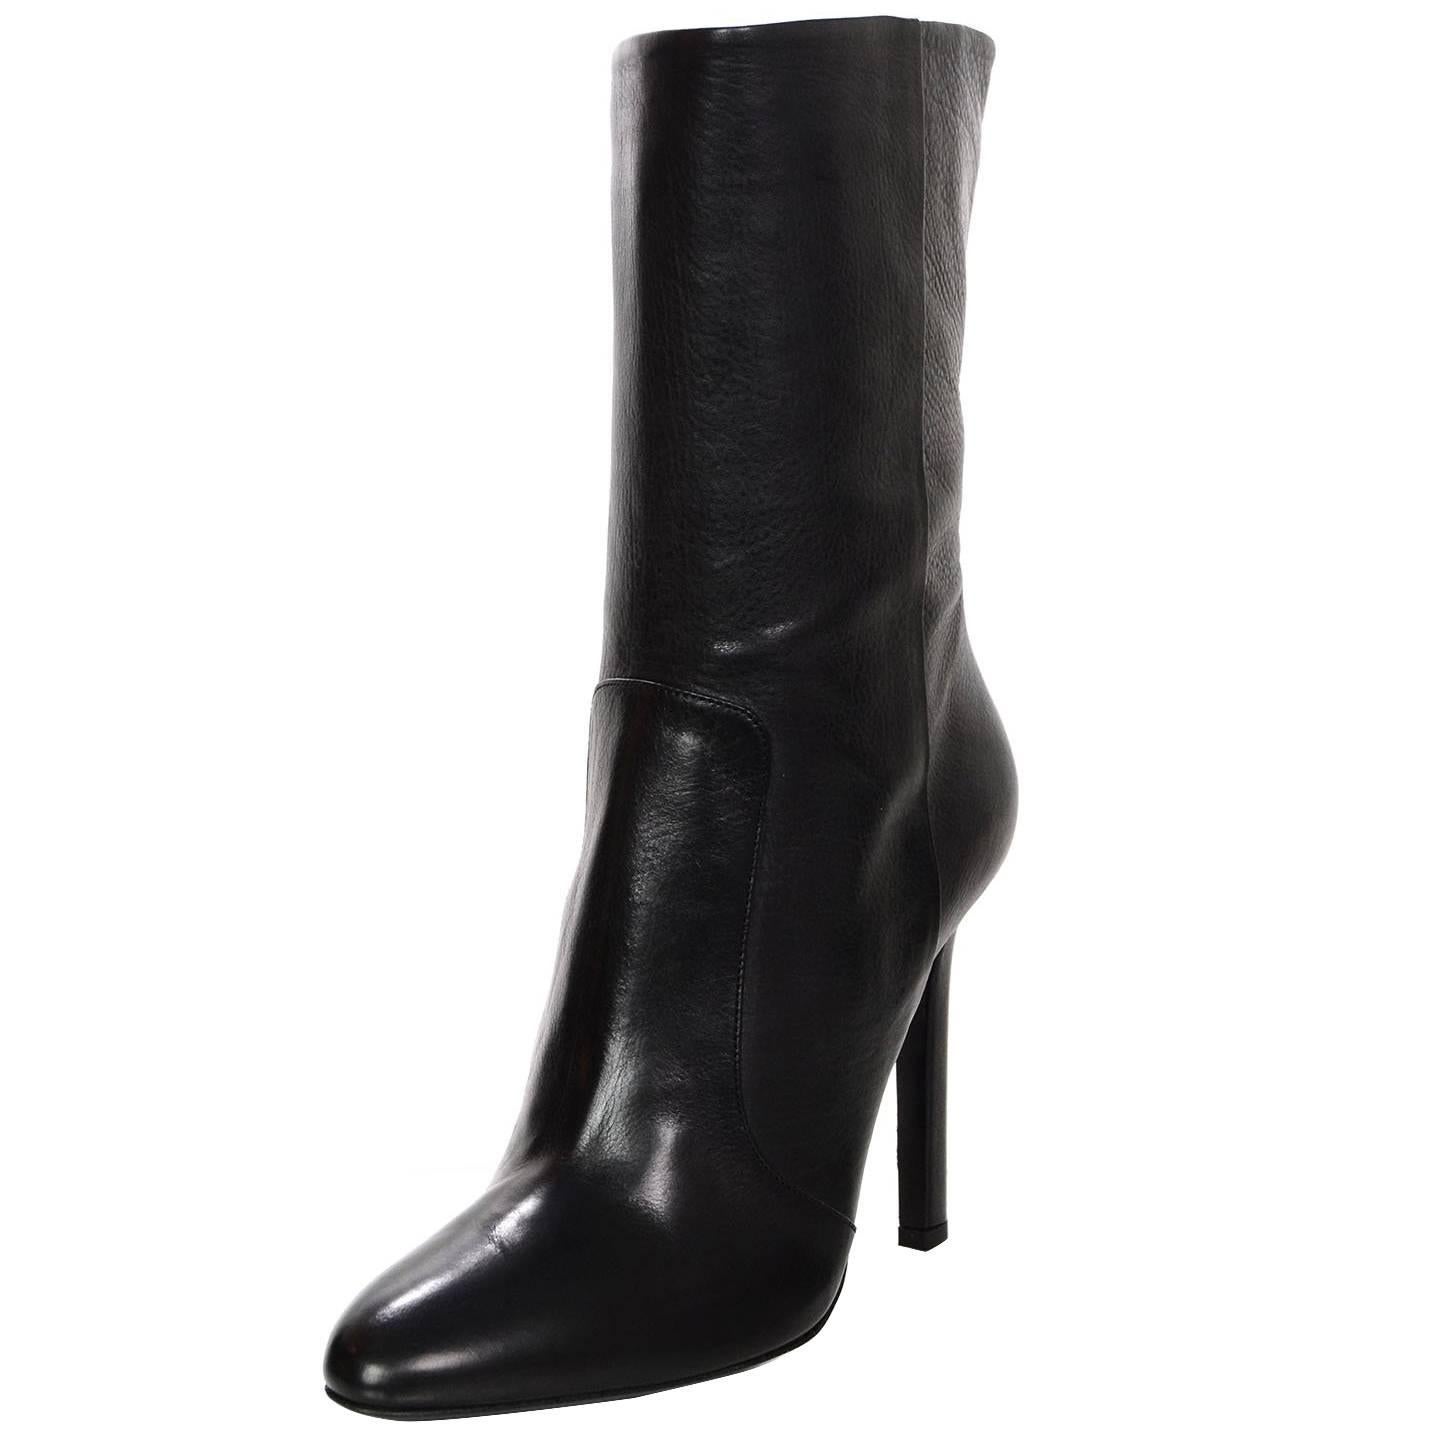 Tamara Mellon NEW Black Leather Rebel Boots sz 37 rt. $895